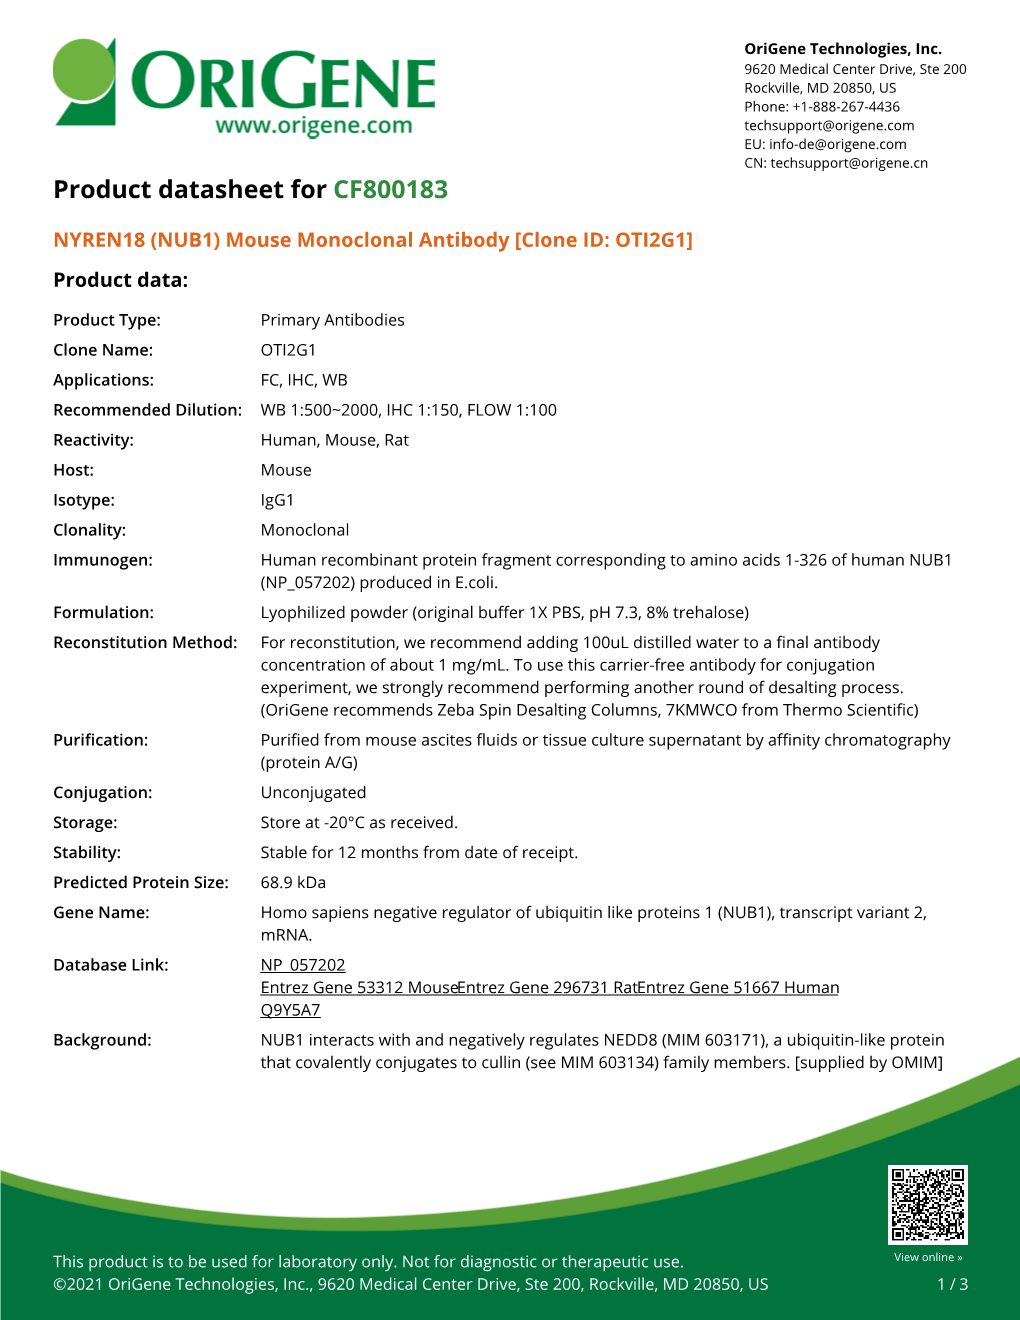 NYREN18 (NUB1) Mouse Monoclonal Antibody [Clone ID: OTI2G1] Product Data